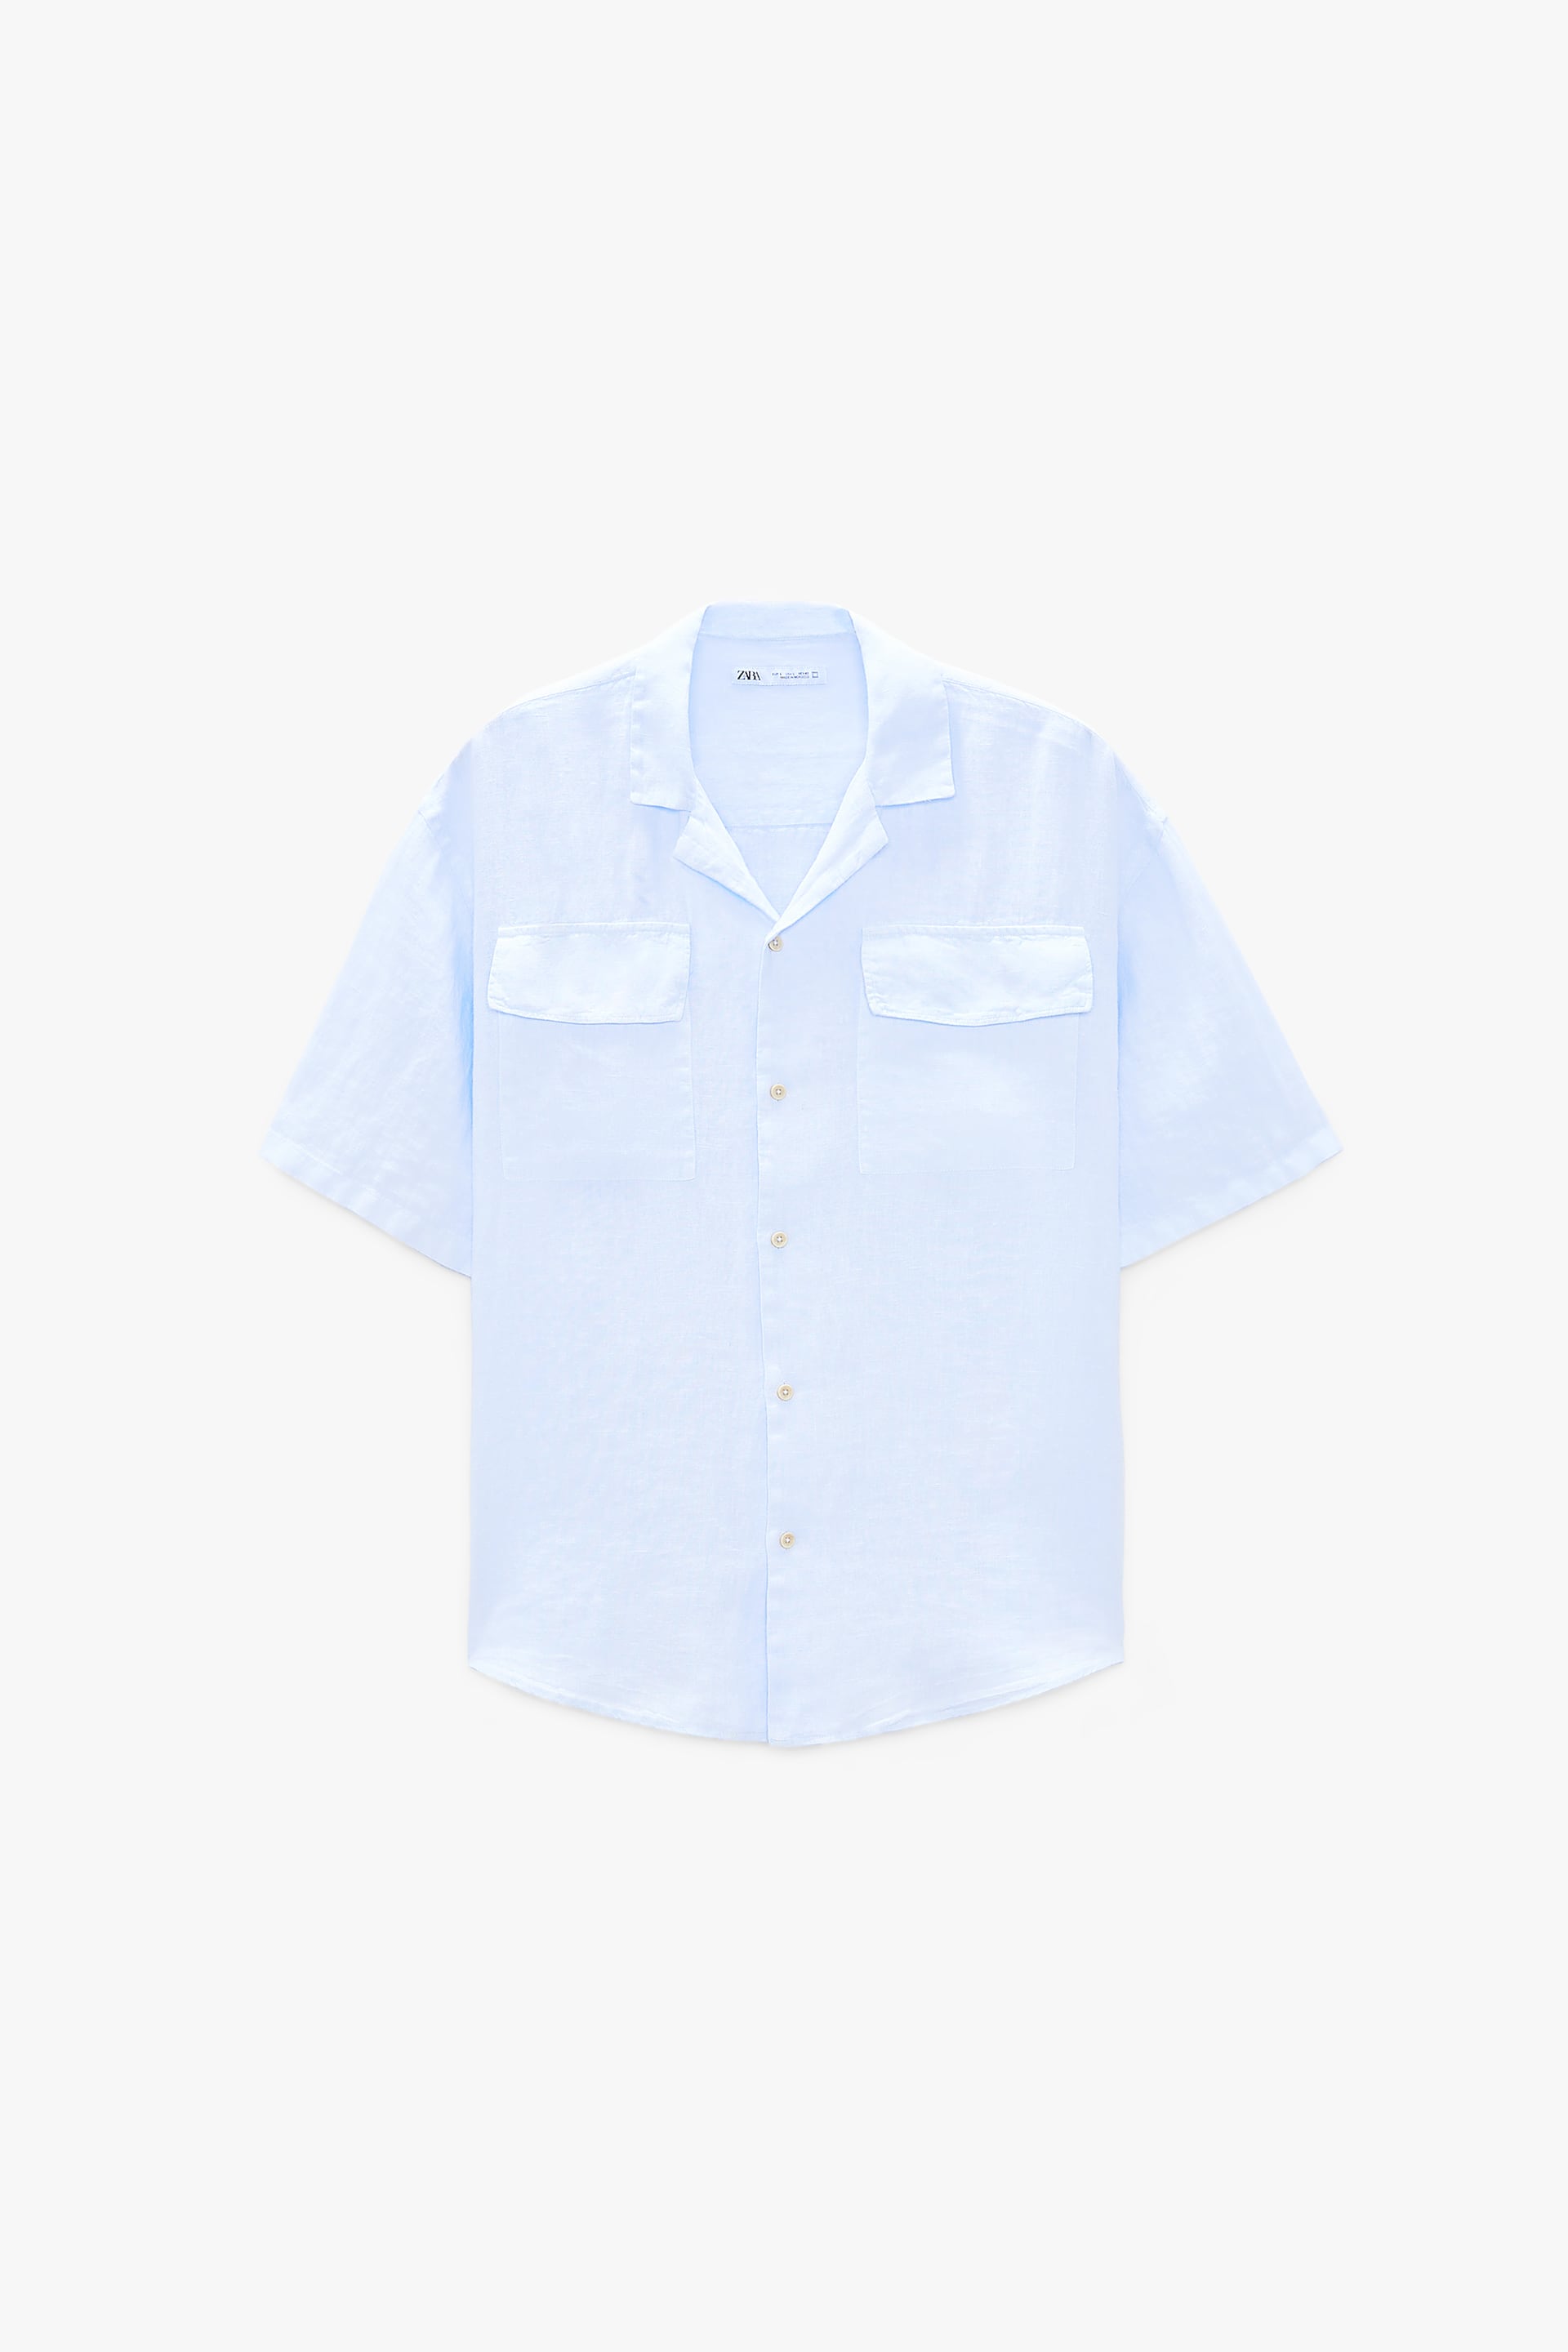 Mens Light Blue Linen Shirt (Medium)